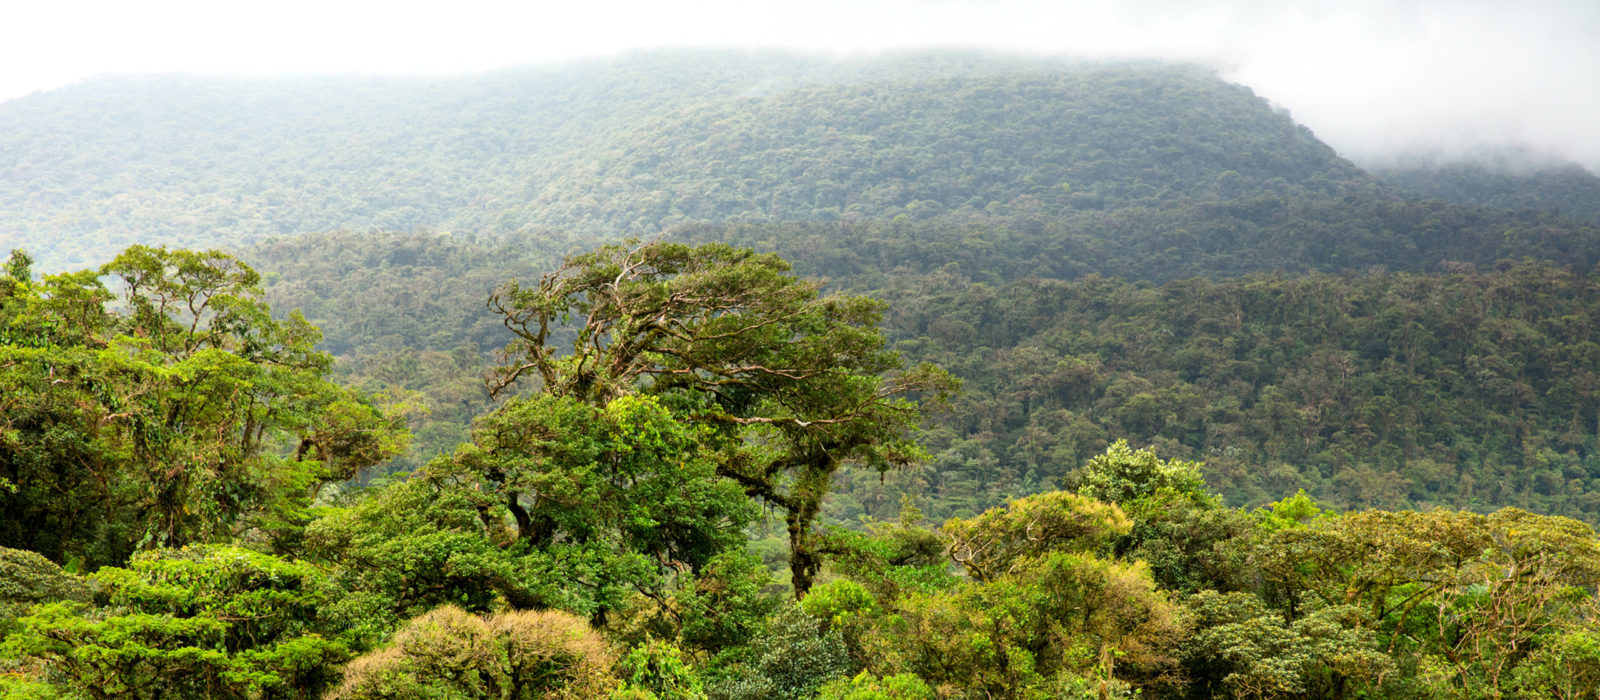 Lush green rainforest of Costa Rica